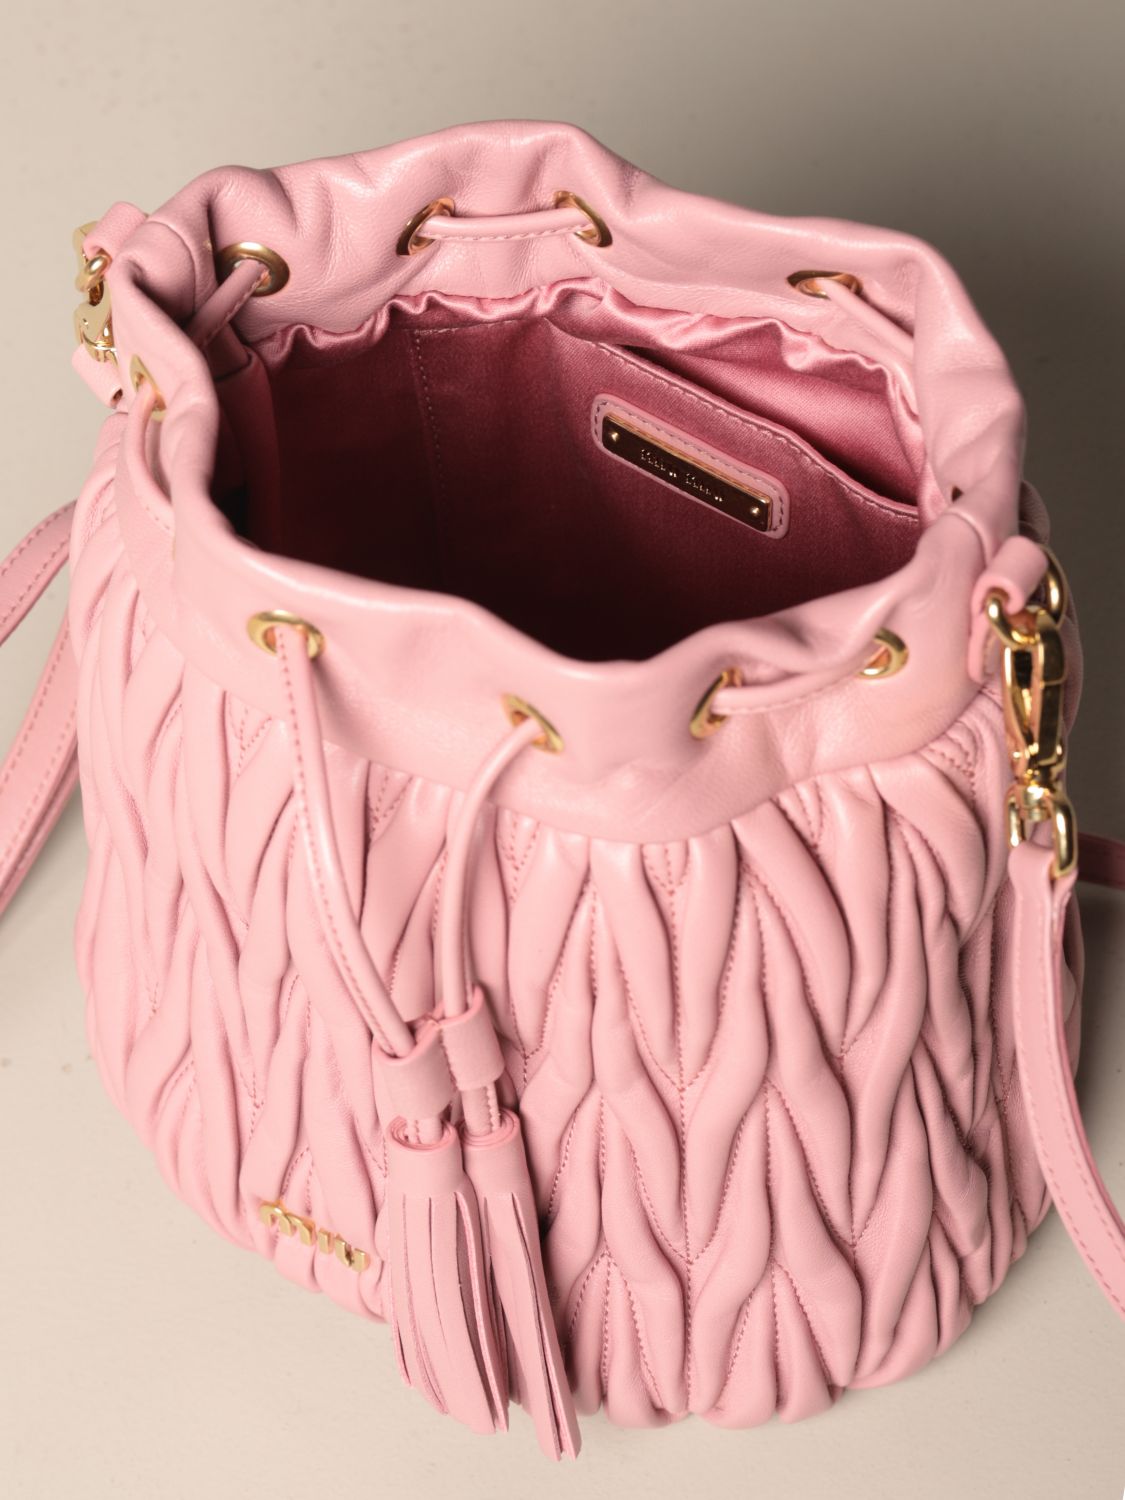 Bow bag leather handbag Miu Miu Pink in Leather - 27543665